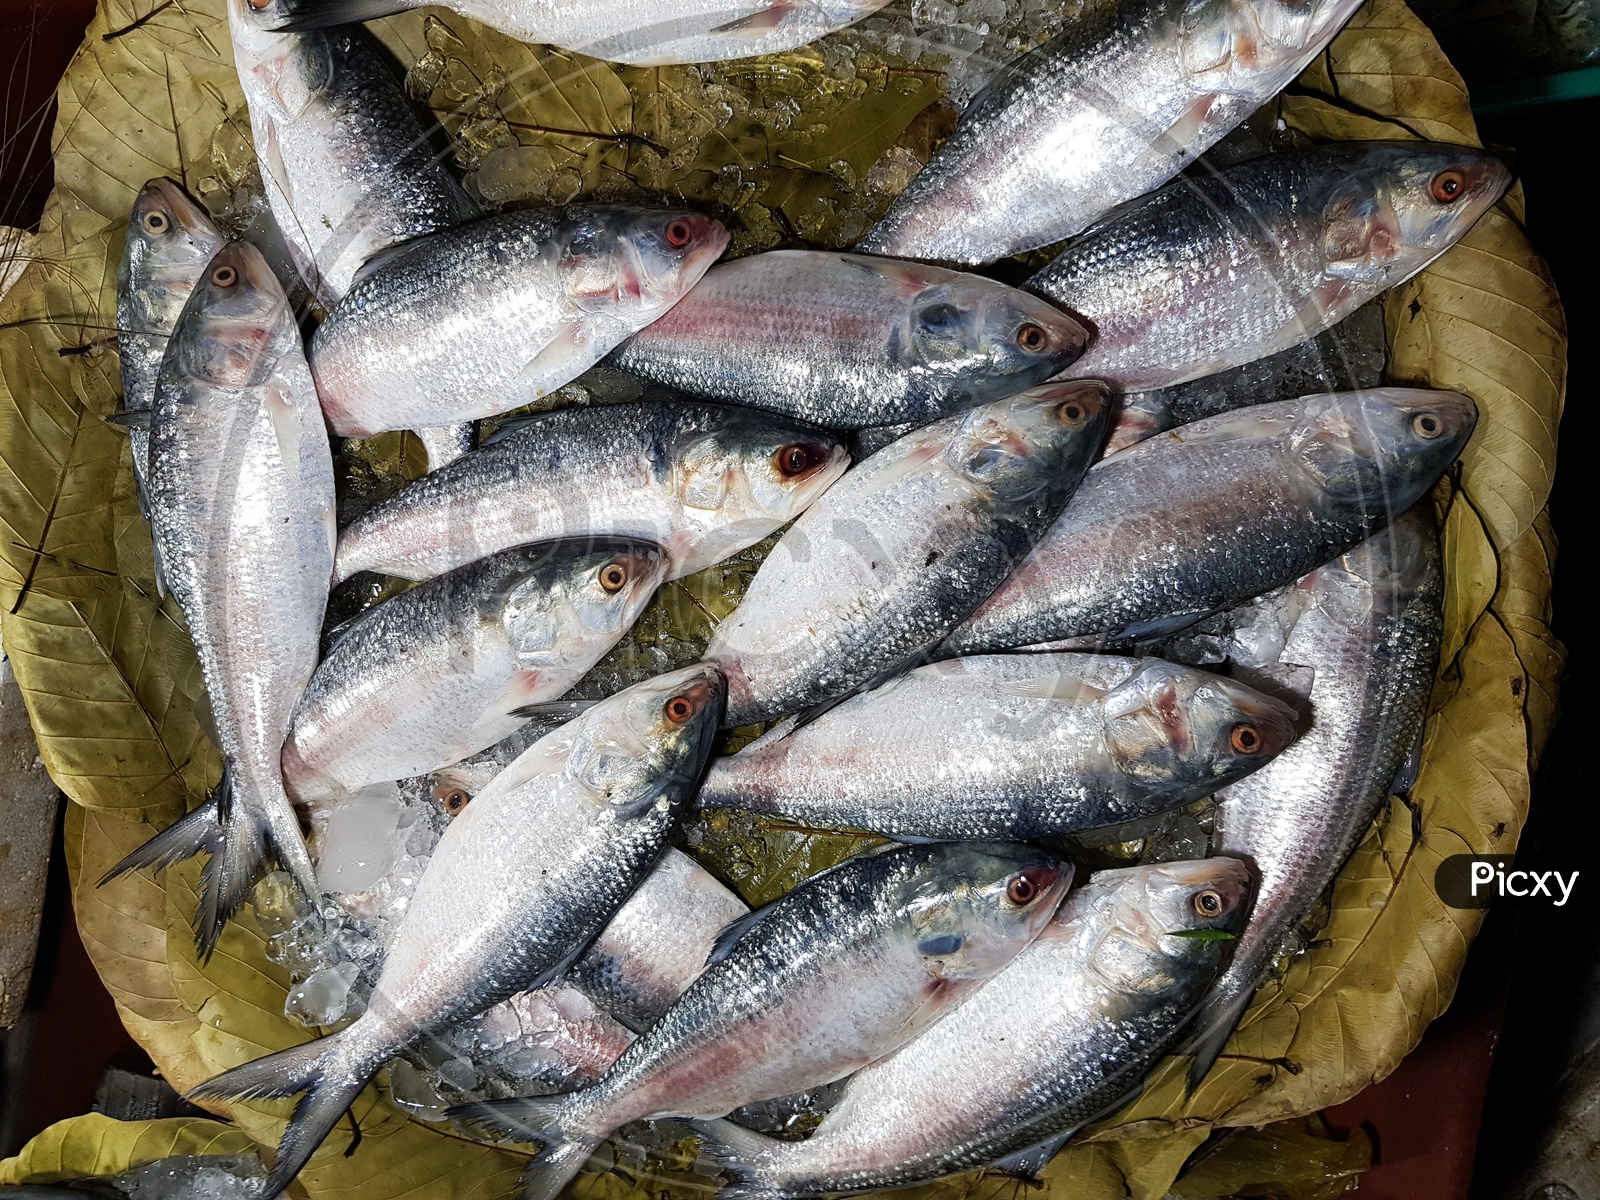 Five-Spot Herring, Hilsa Kelee Shad Tenualosa Ilisha Fishes On Ice For Sale In Fish Market With Silvery Scale